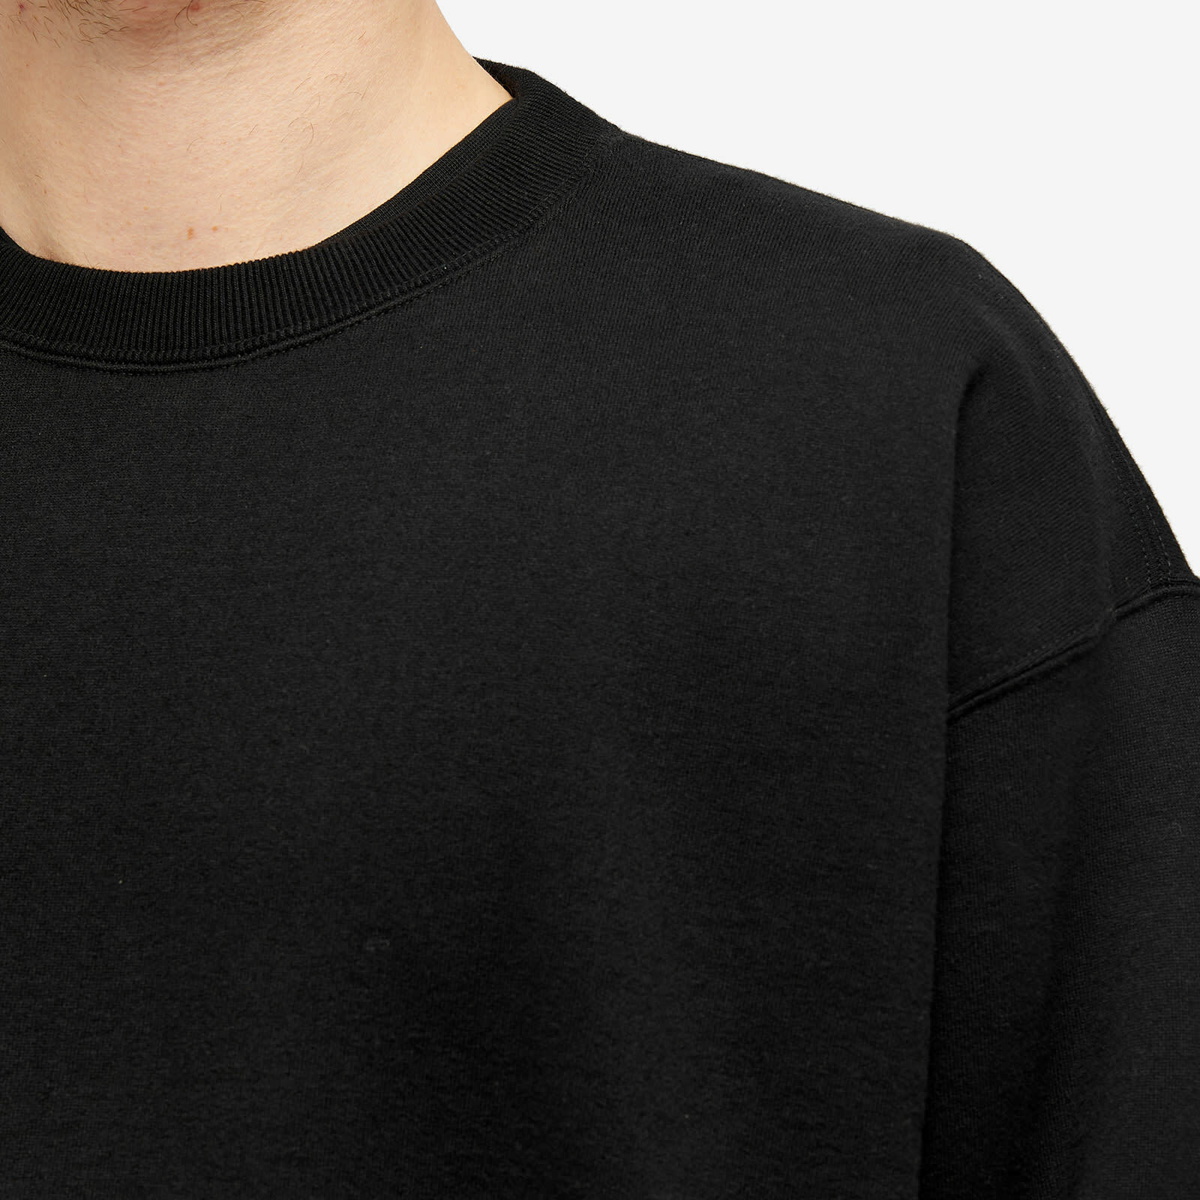 AURALEE: Black Crewneck Sweater